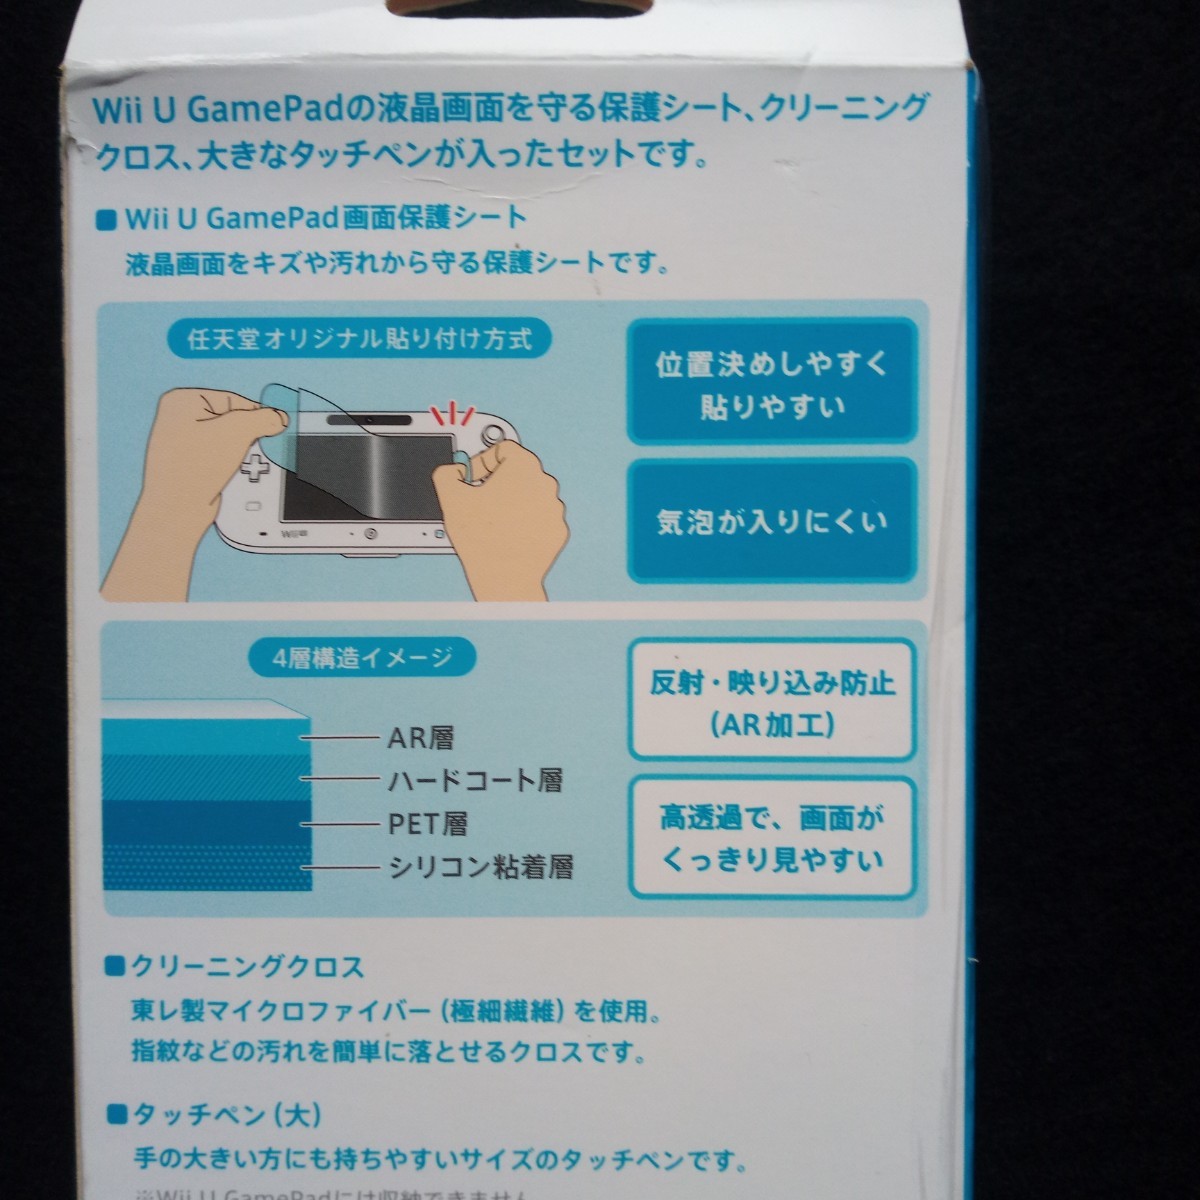 Wii U GamePad アクセサリー3点パック